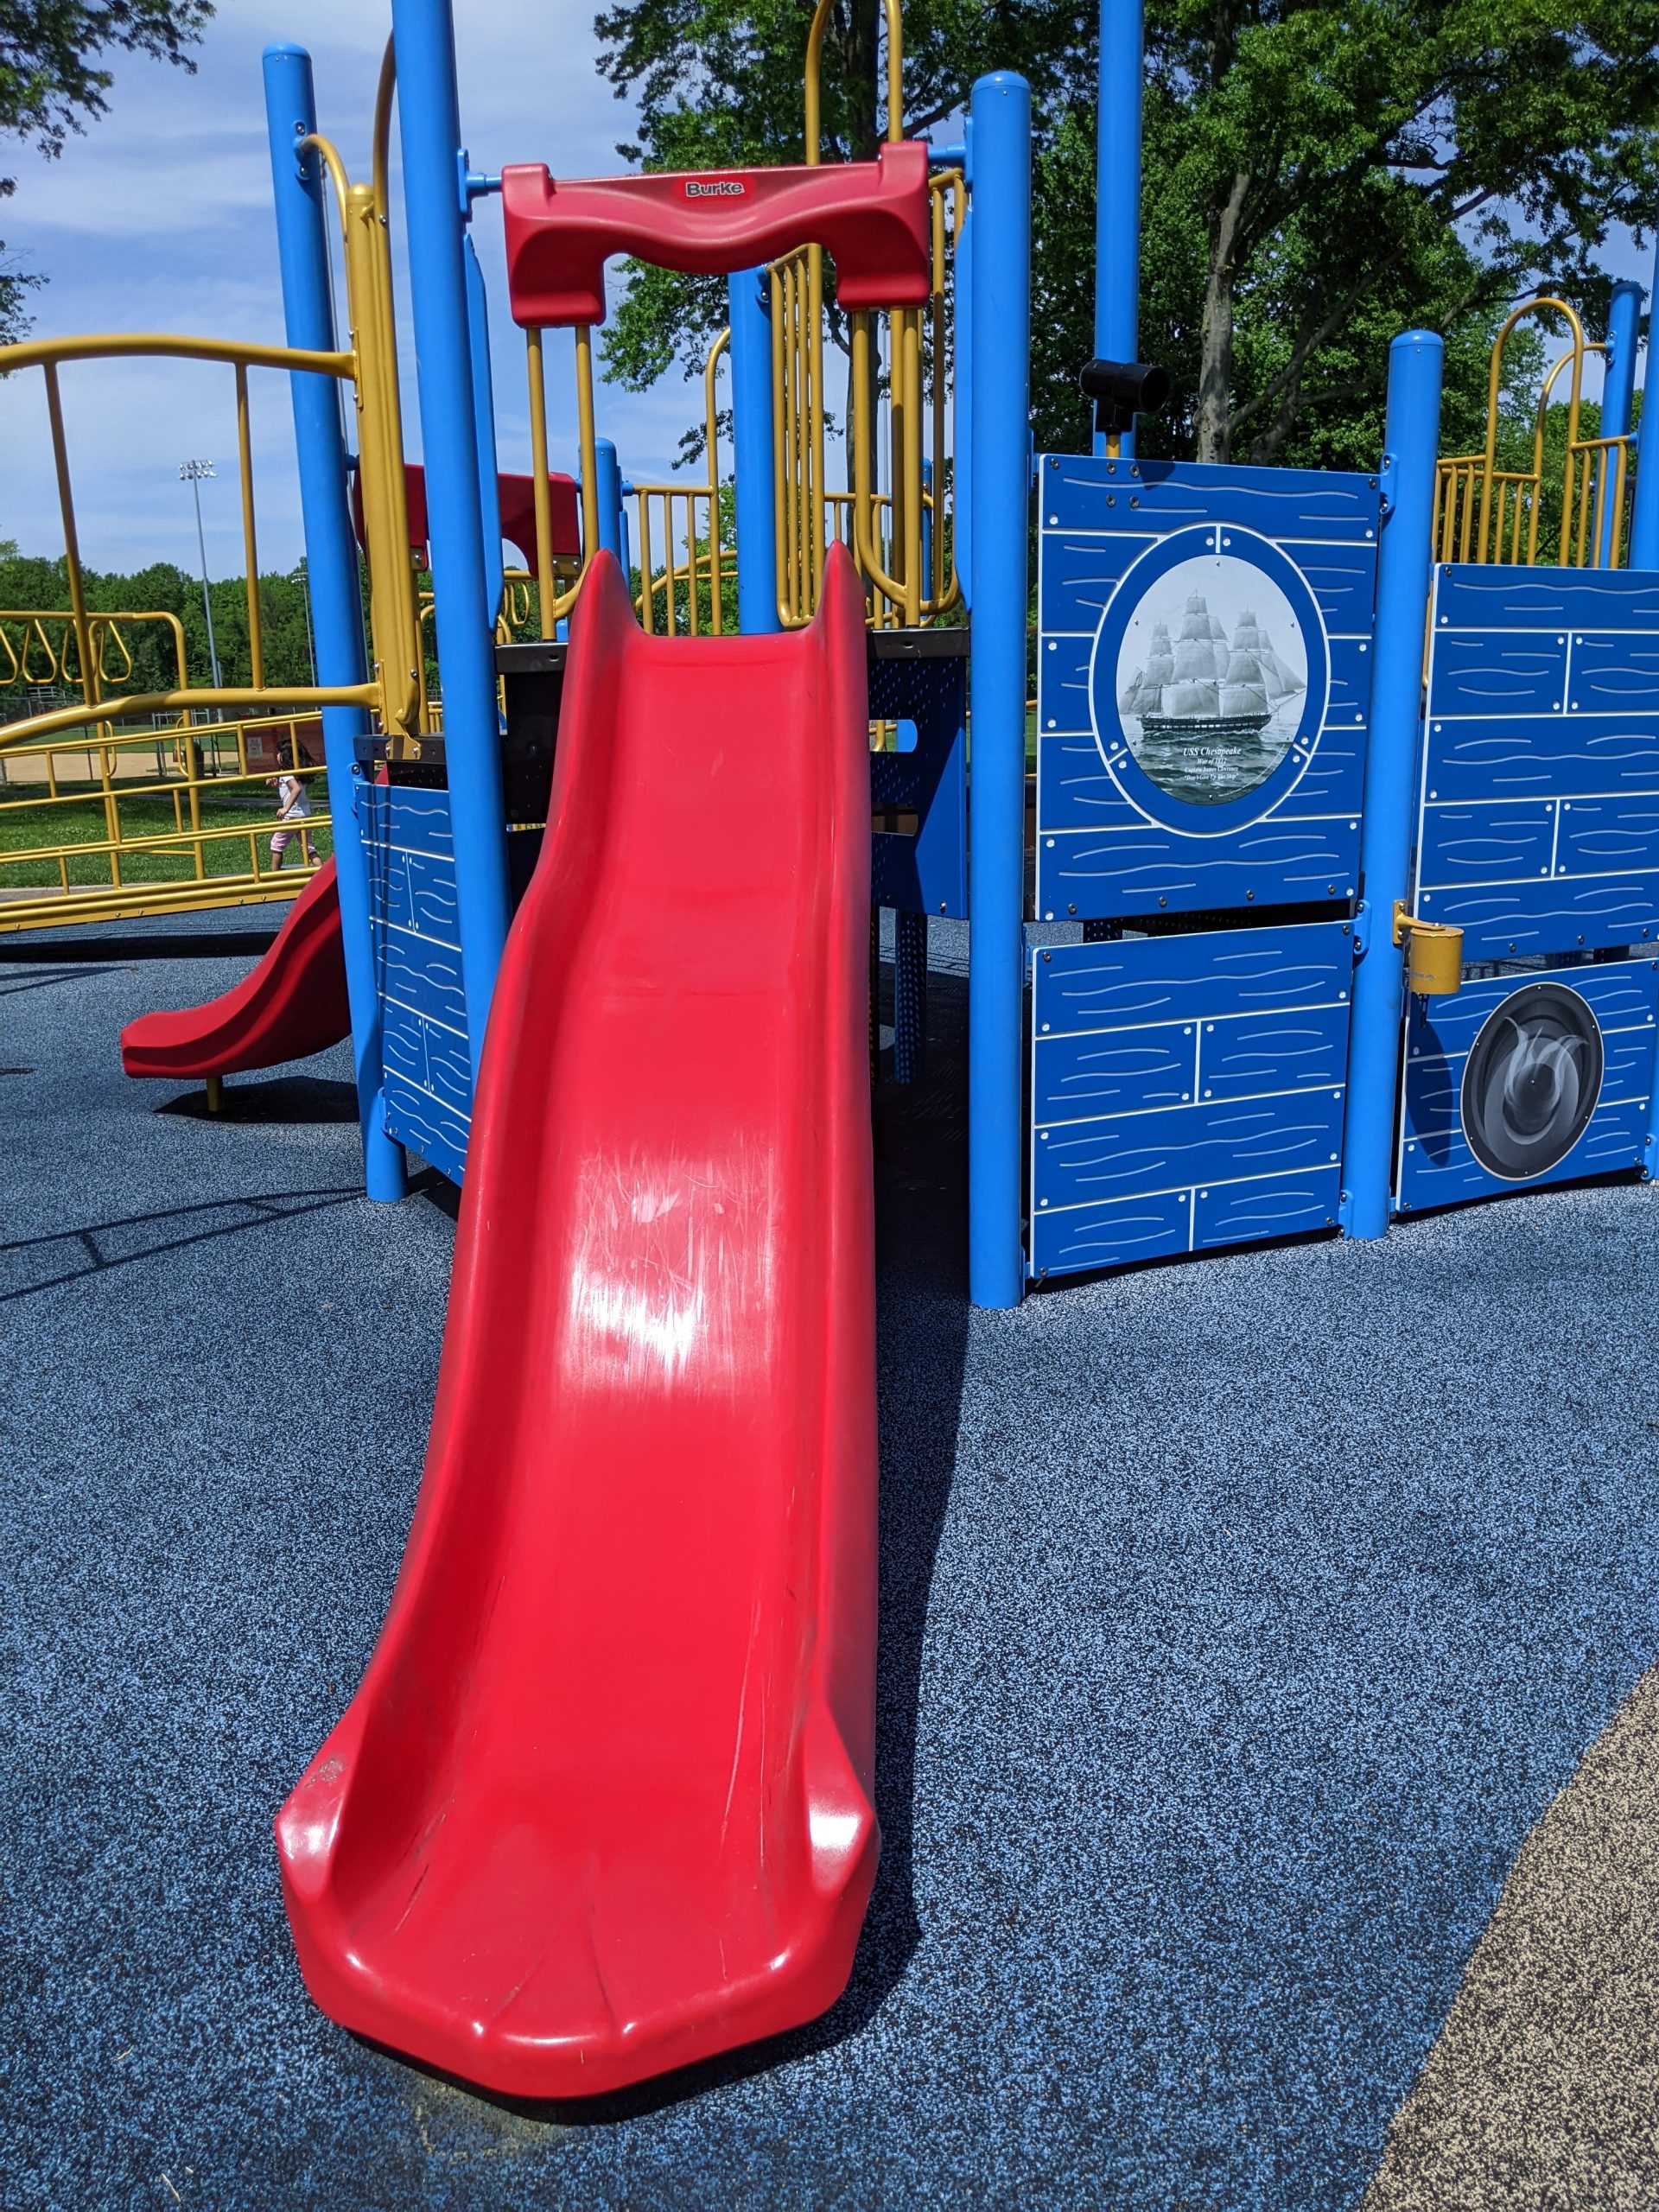 Central Park Playground in Lawrenceville NJ older kid playground Slide